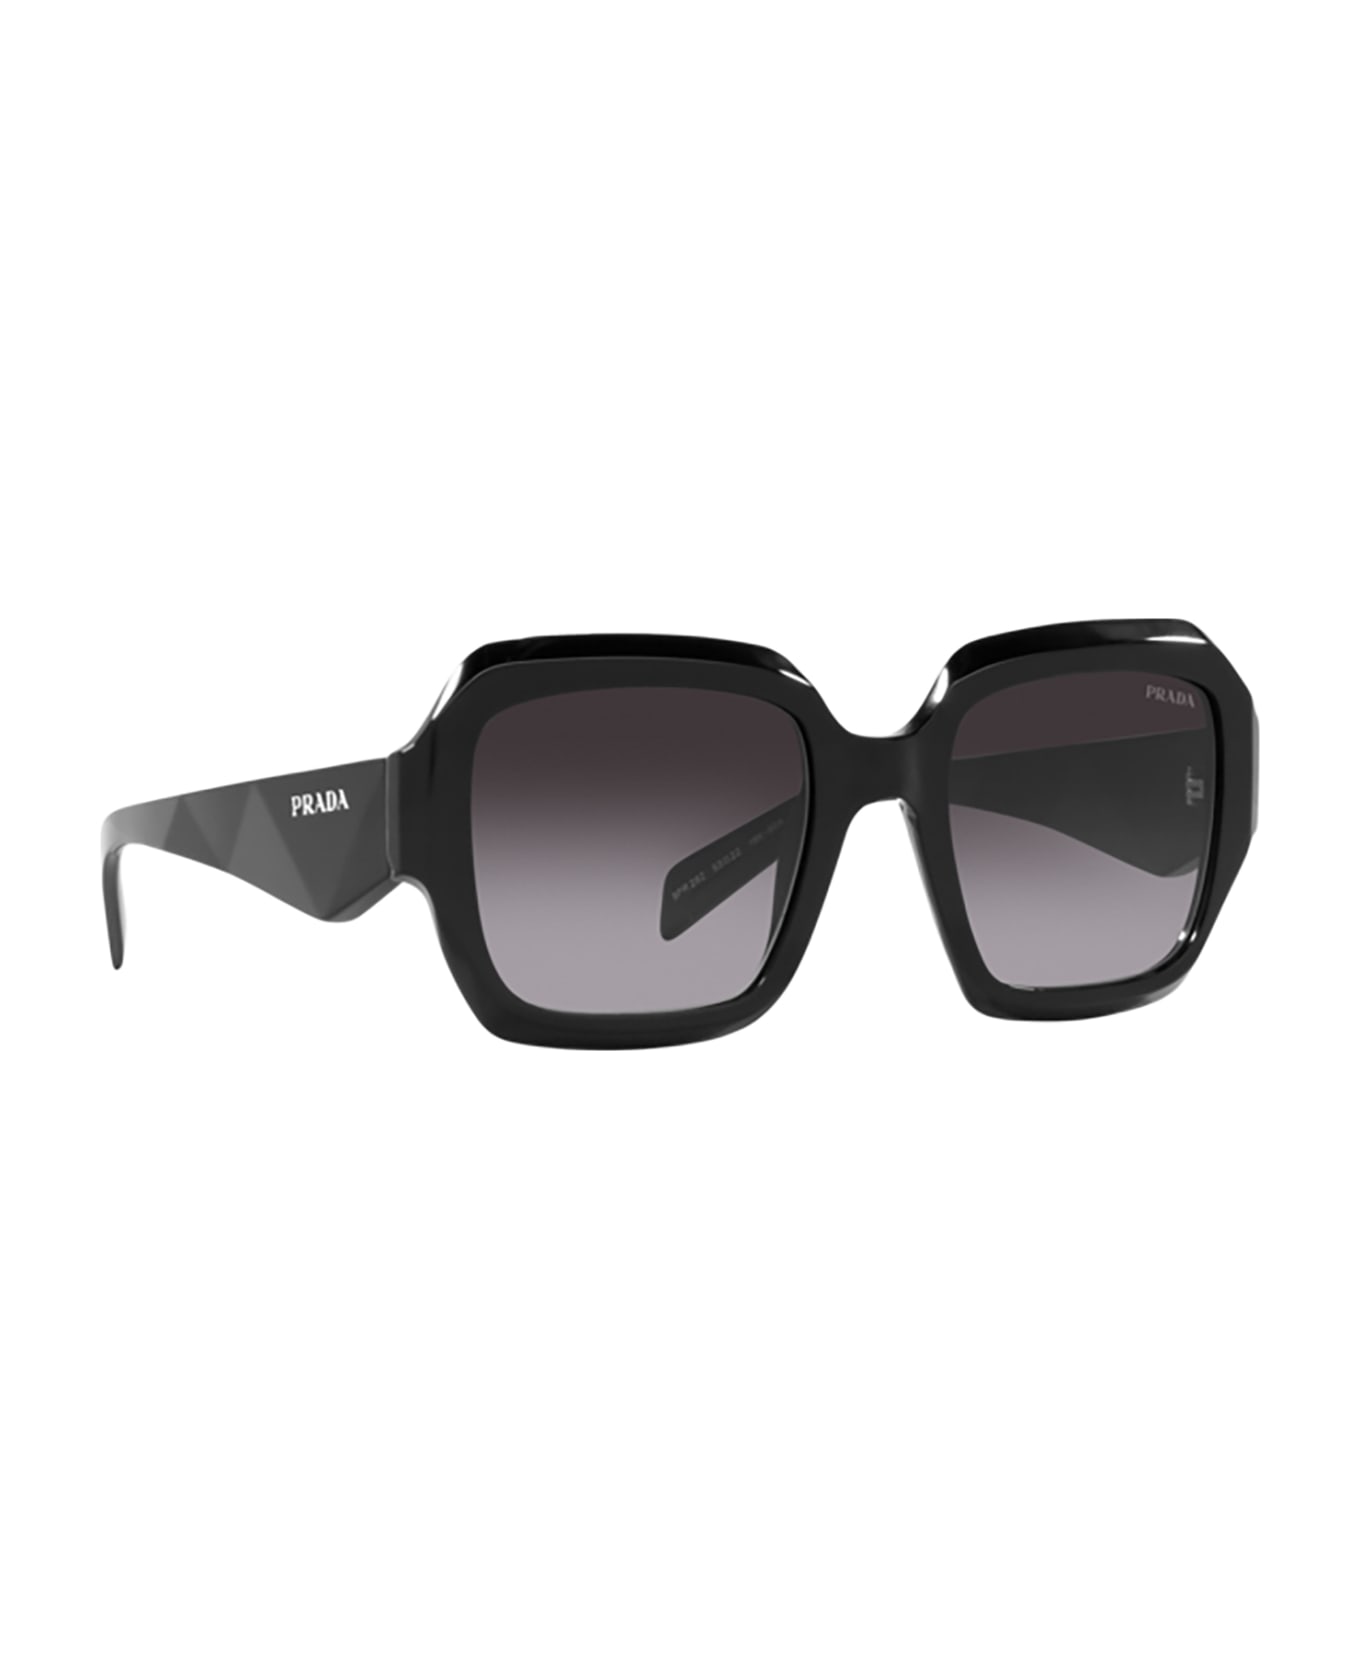 Prada Eyewear Pr 28zs Black Sunglasses - Black